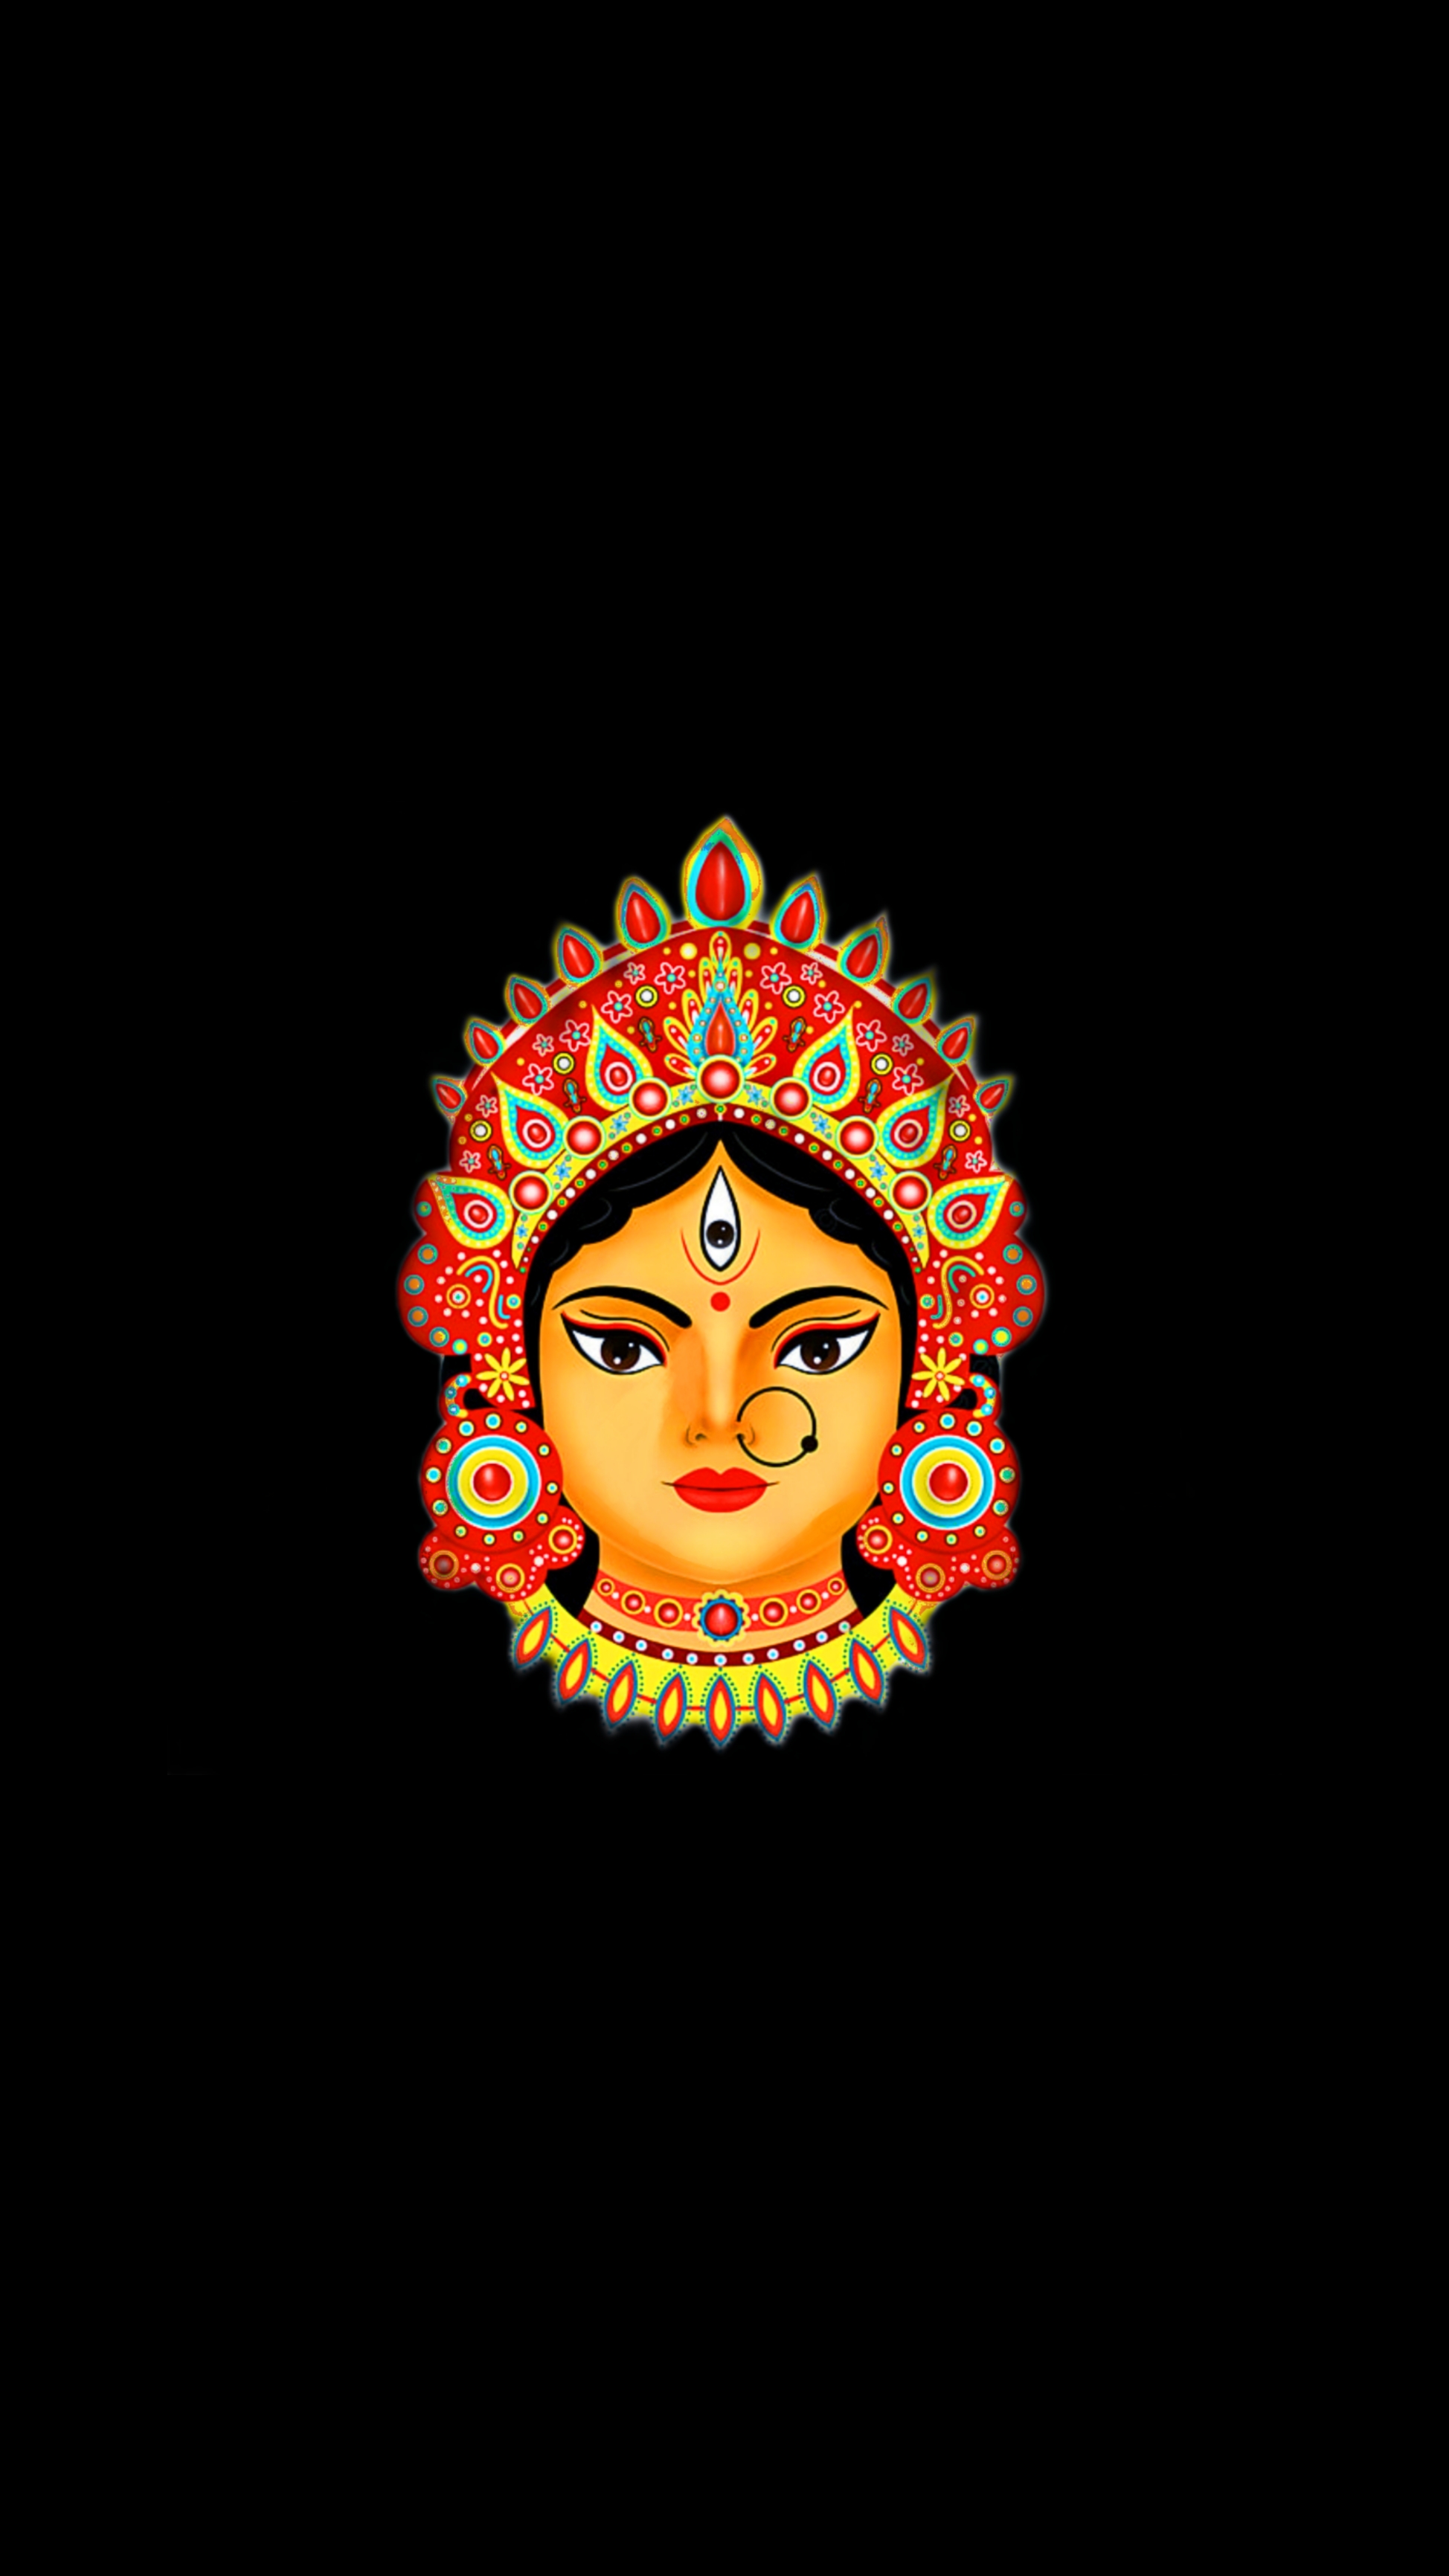 Durga ji Dark Black wallpaper image | Durga ji Wallpapers Dark Black Background